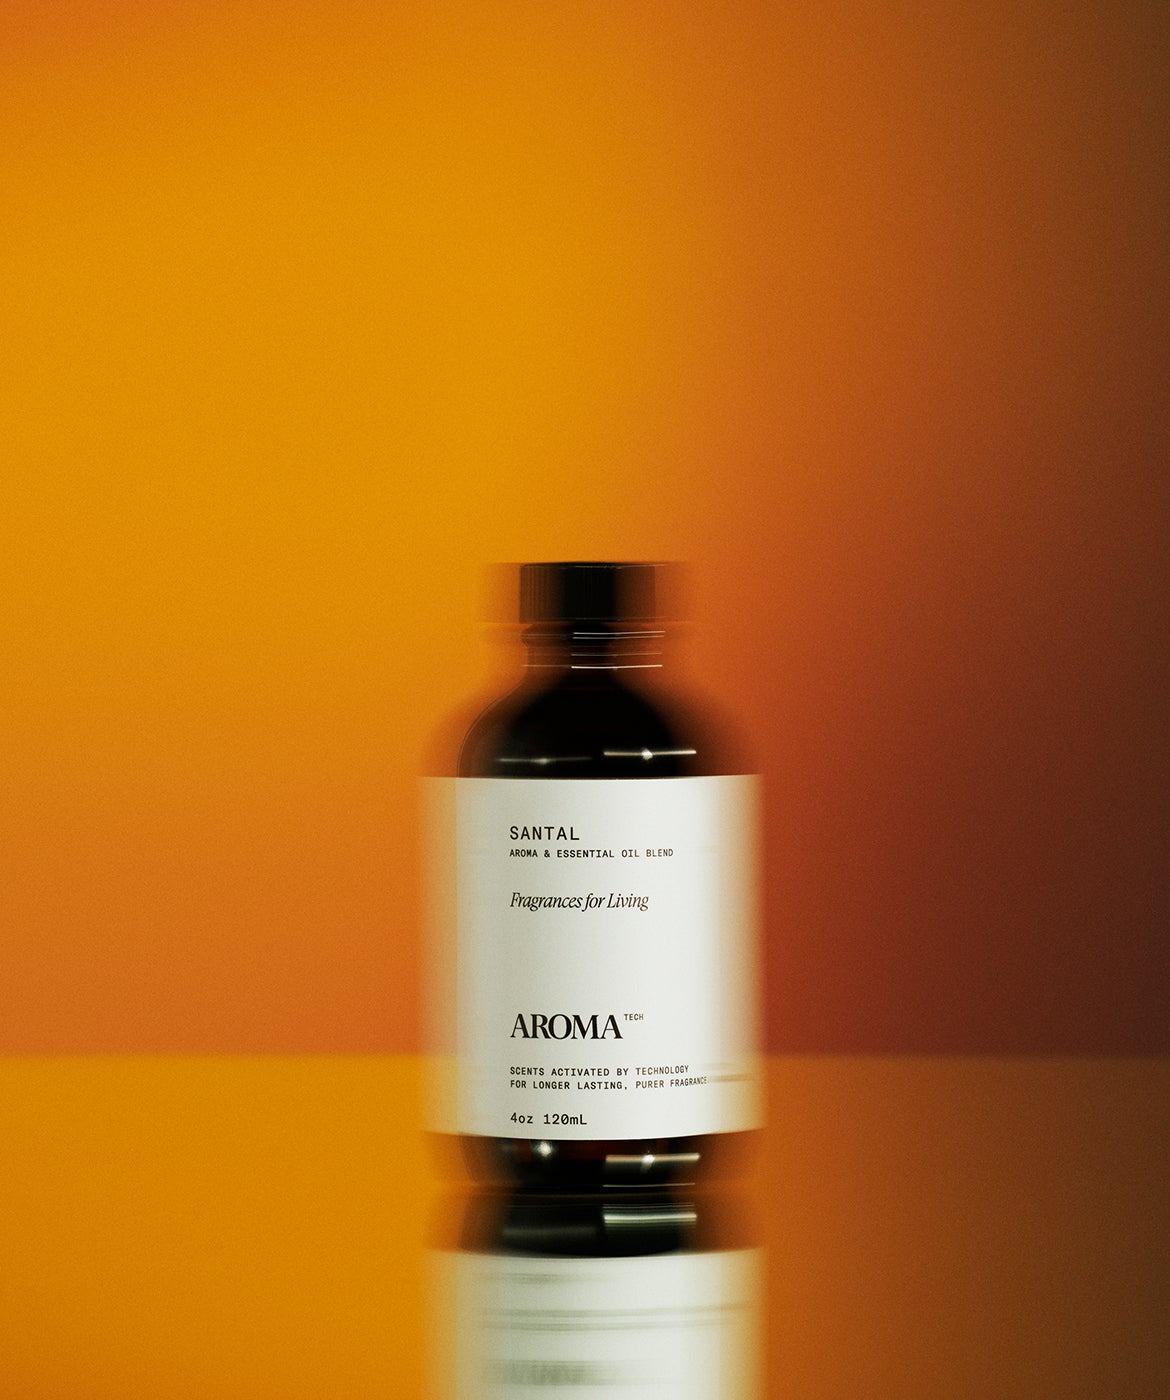 Santal Escape Aroma Oil – AromaTech